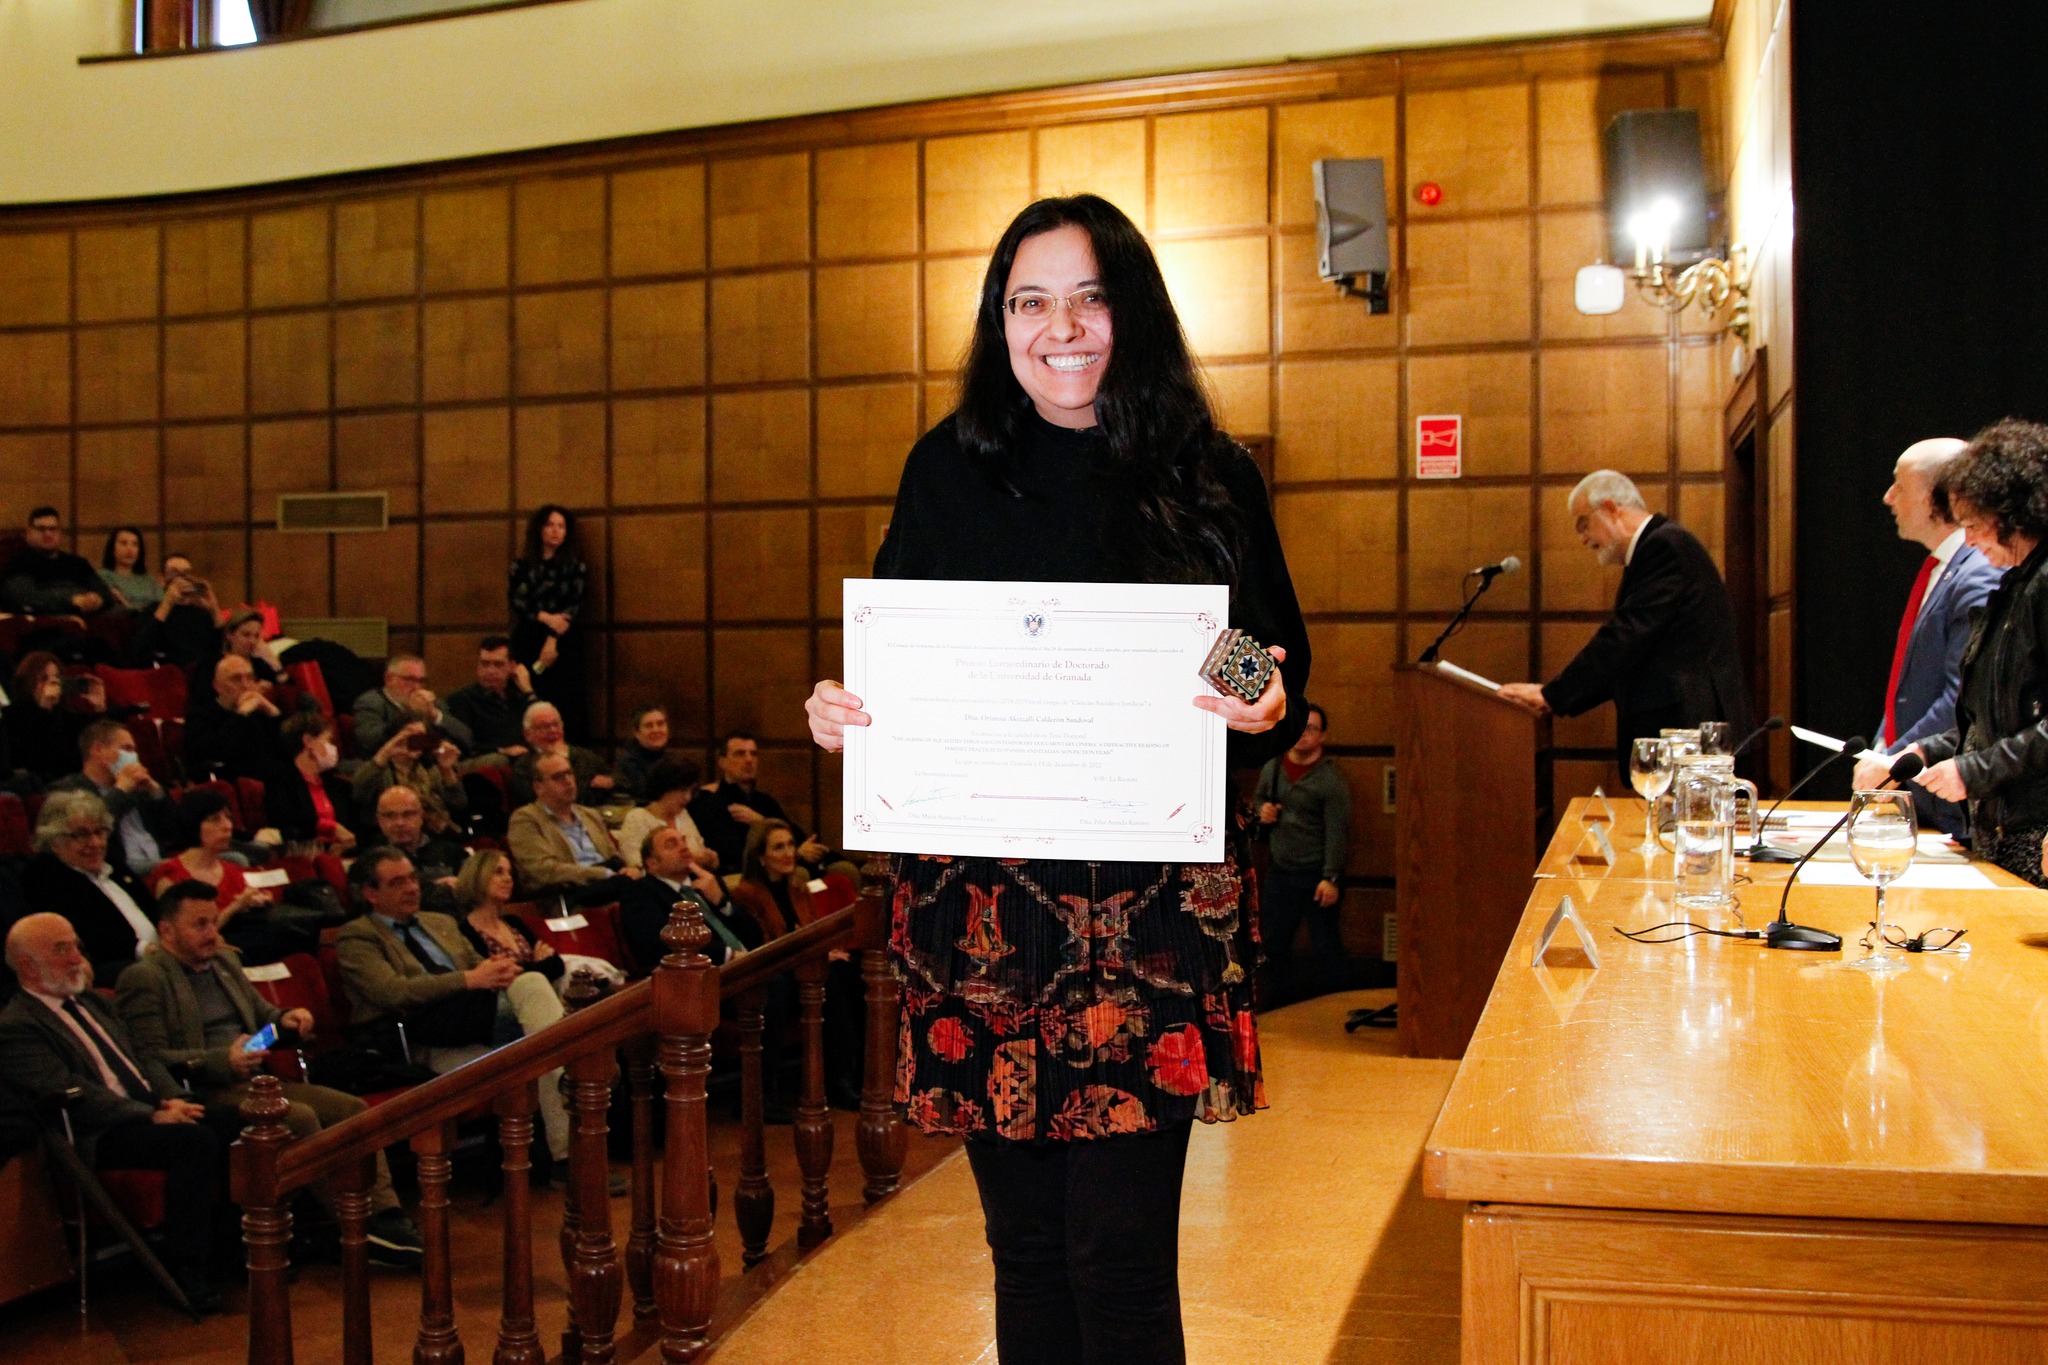 Orianna Calderon showing the diploma